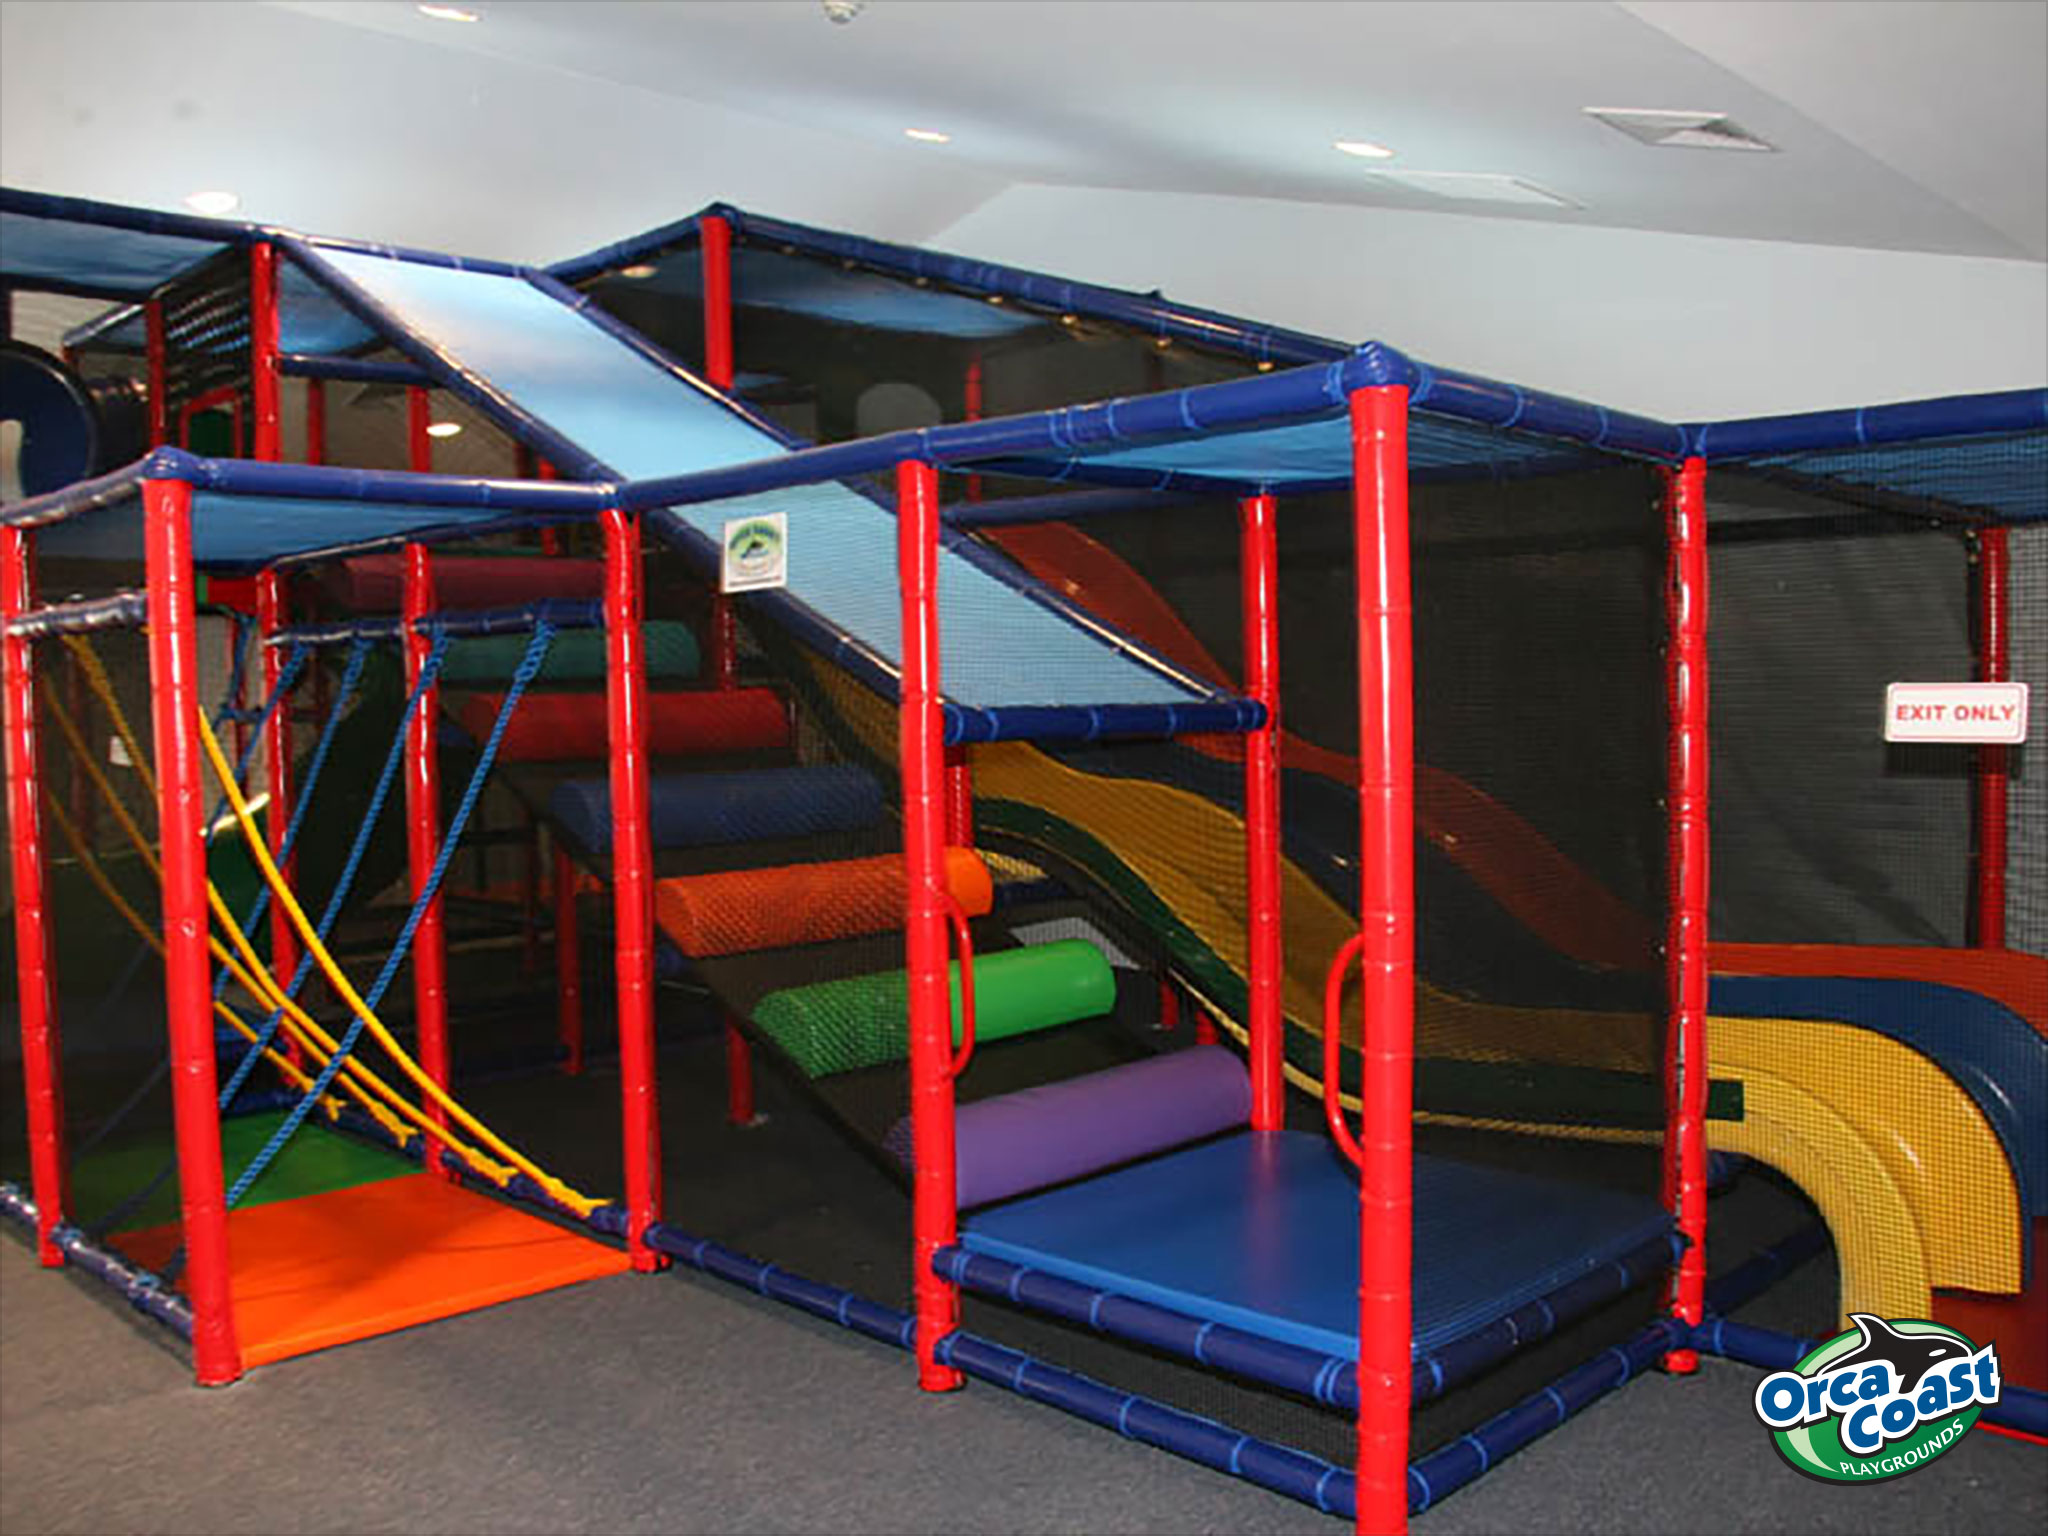 All Kids First Indoor Playground: A World of Fun in Vineland, NJ